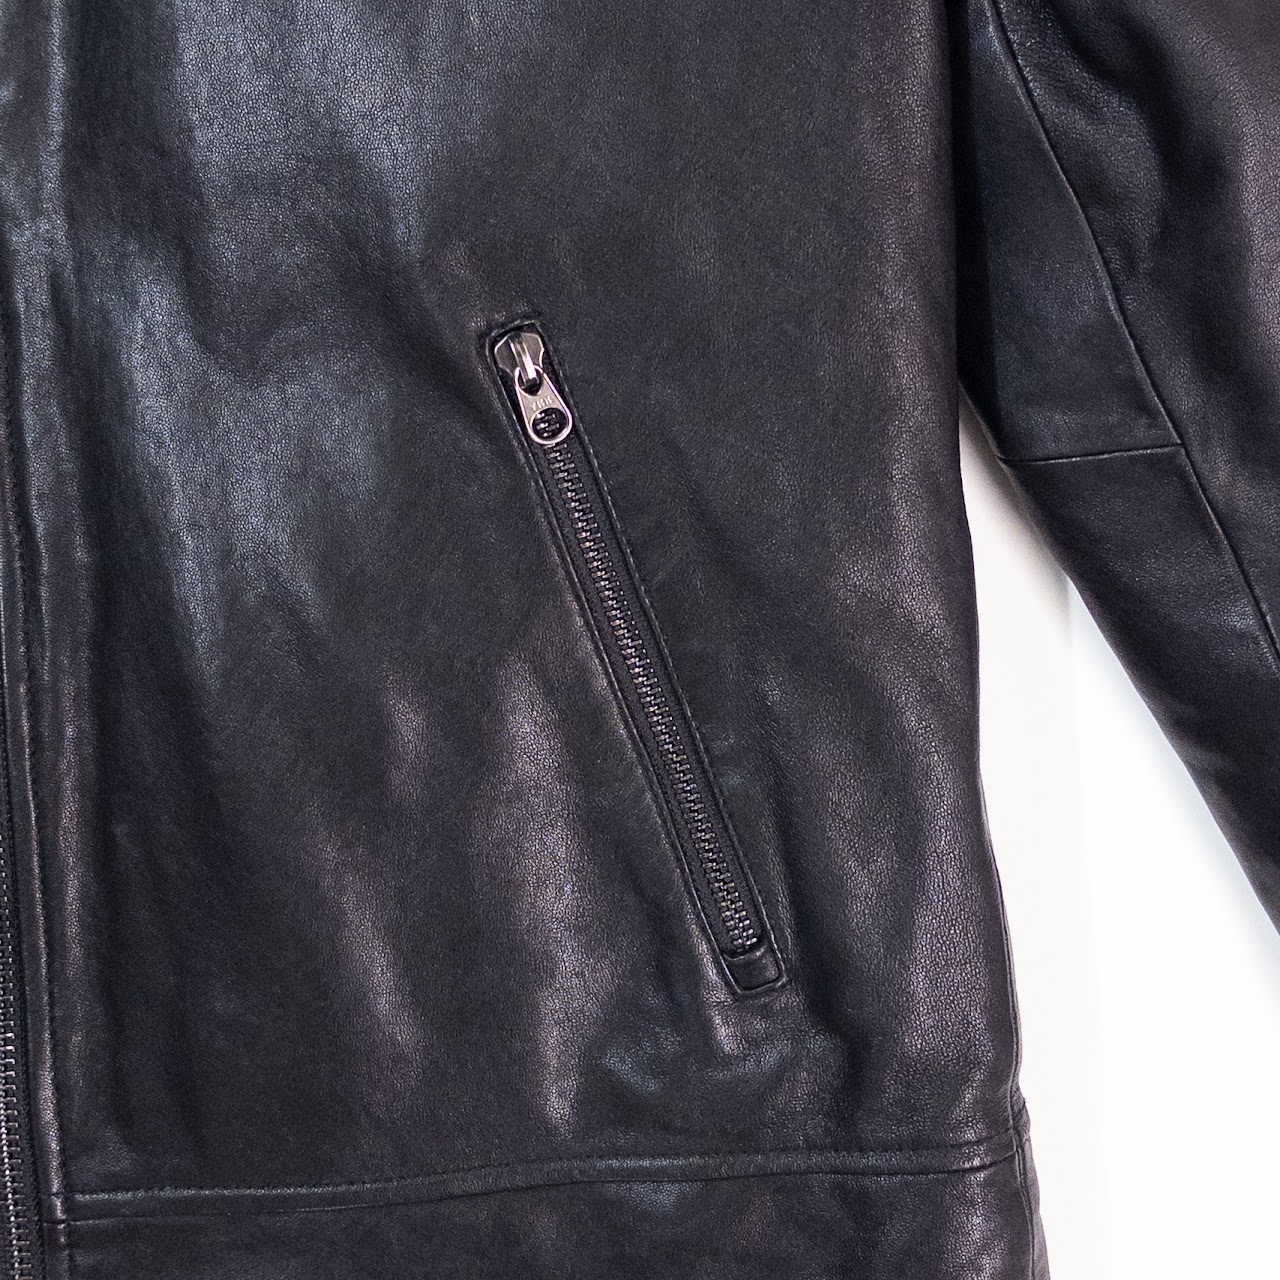 Mackage Insulated Leather Motorcycle Style Jacket